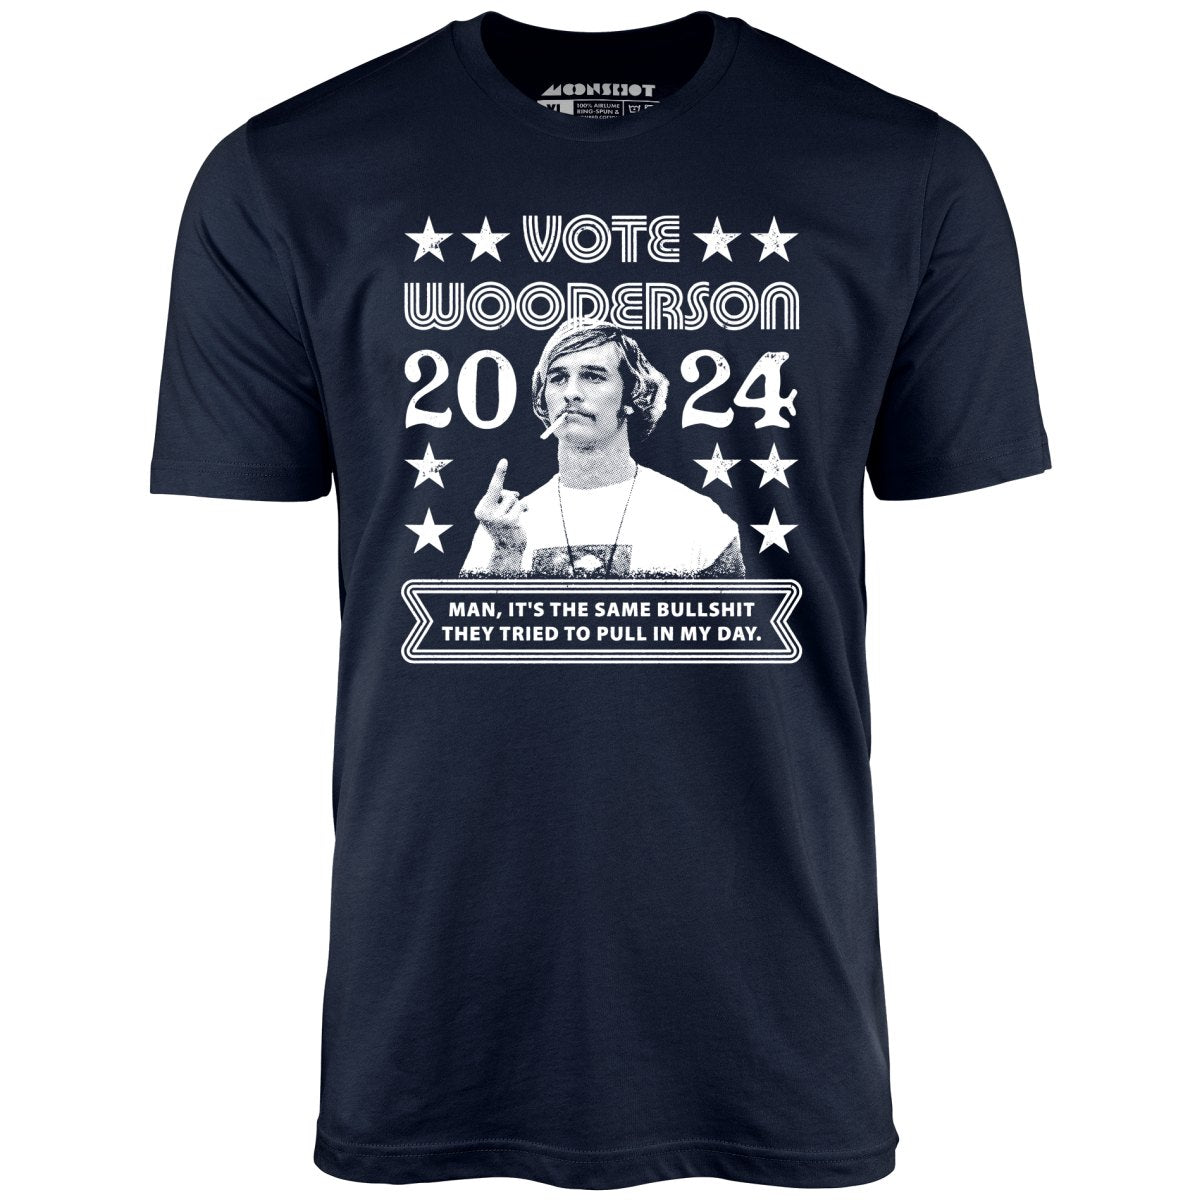 Wooderson 2024 - Unisex T-Shirt